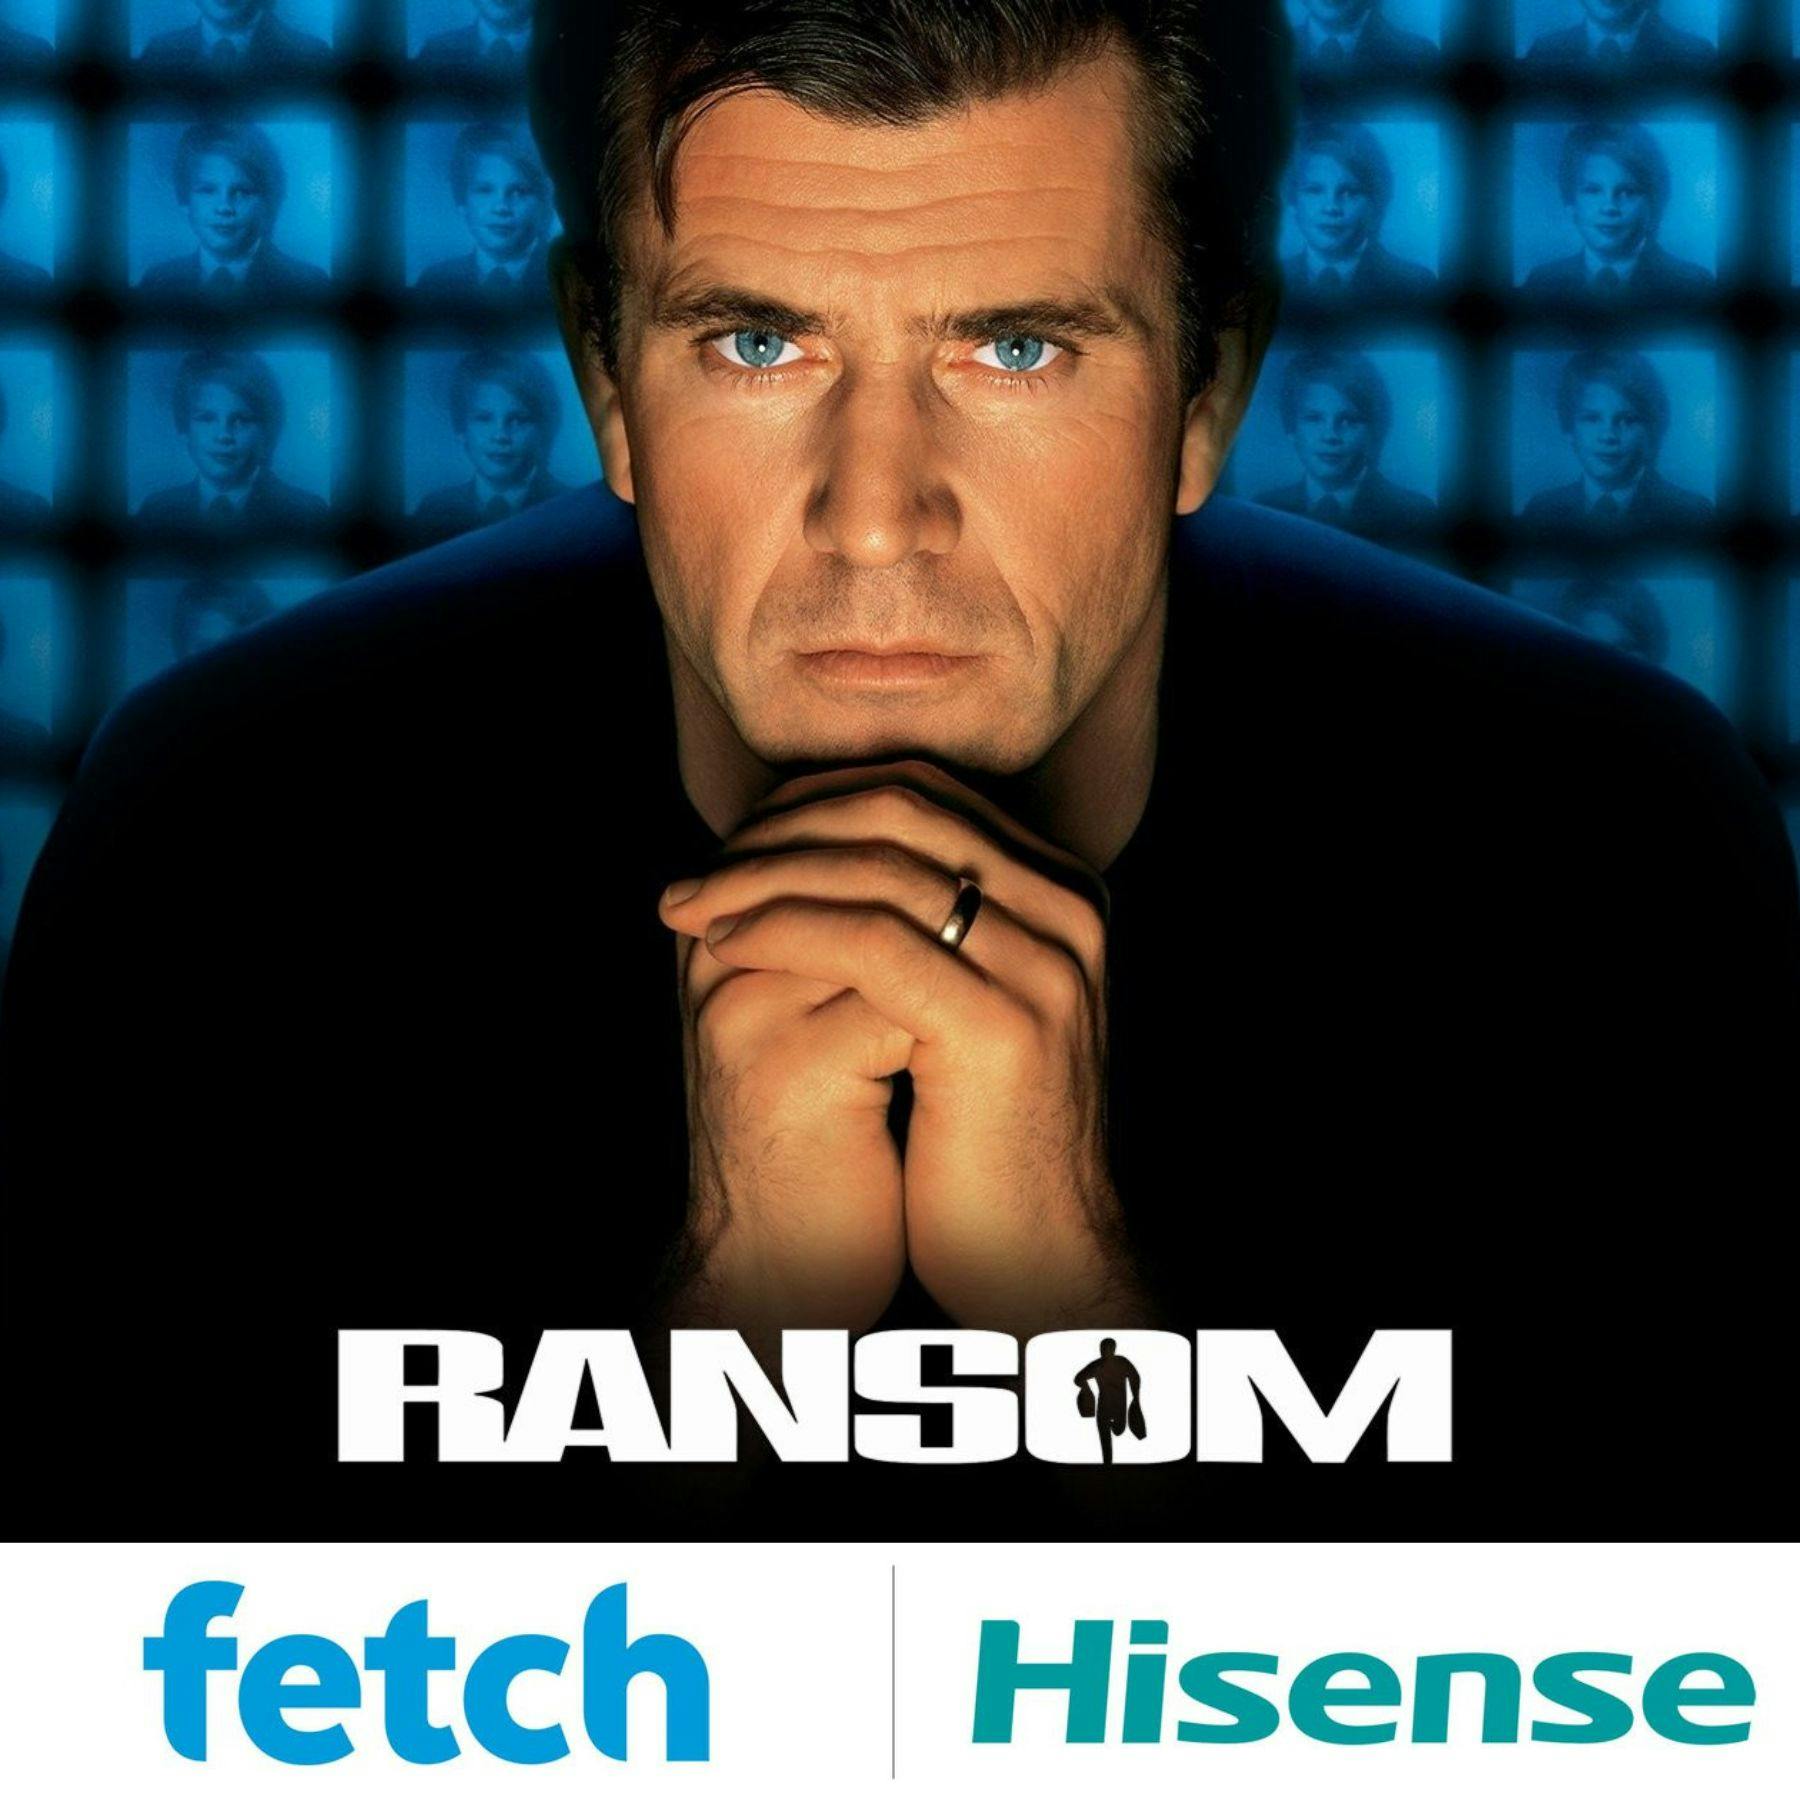 Movies: Ransom